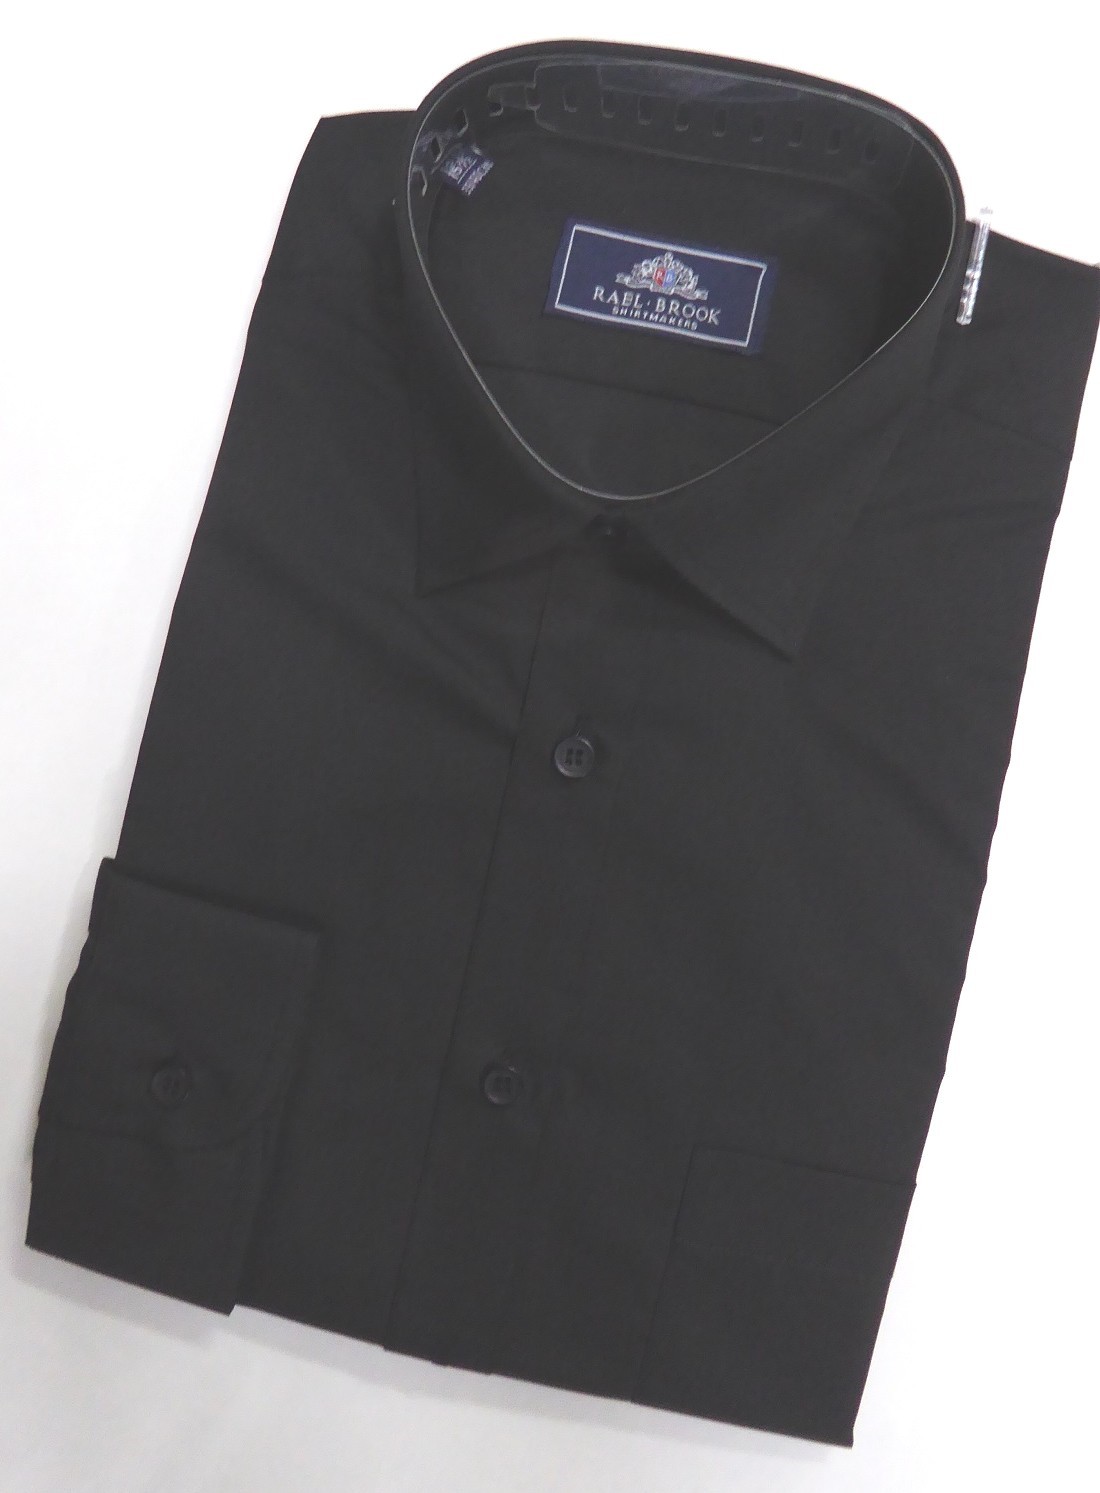 Rael Brook Shirt 8032 black size 17.5